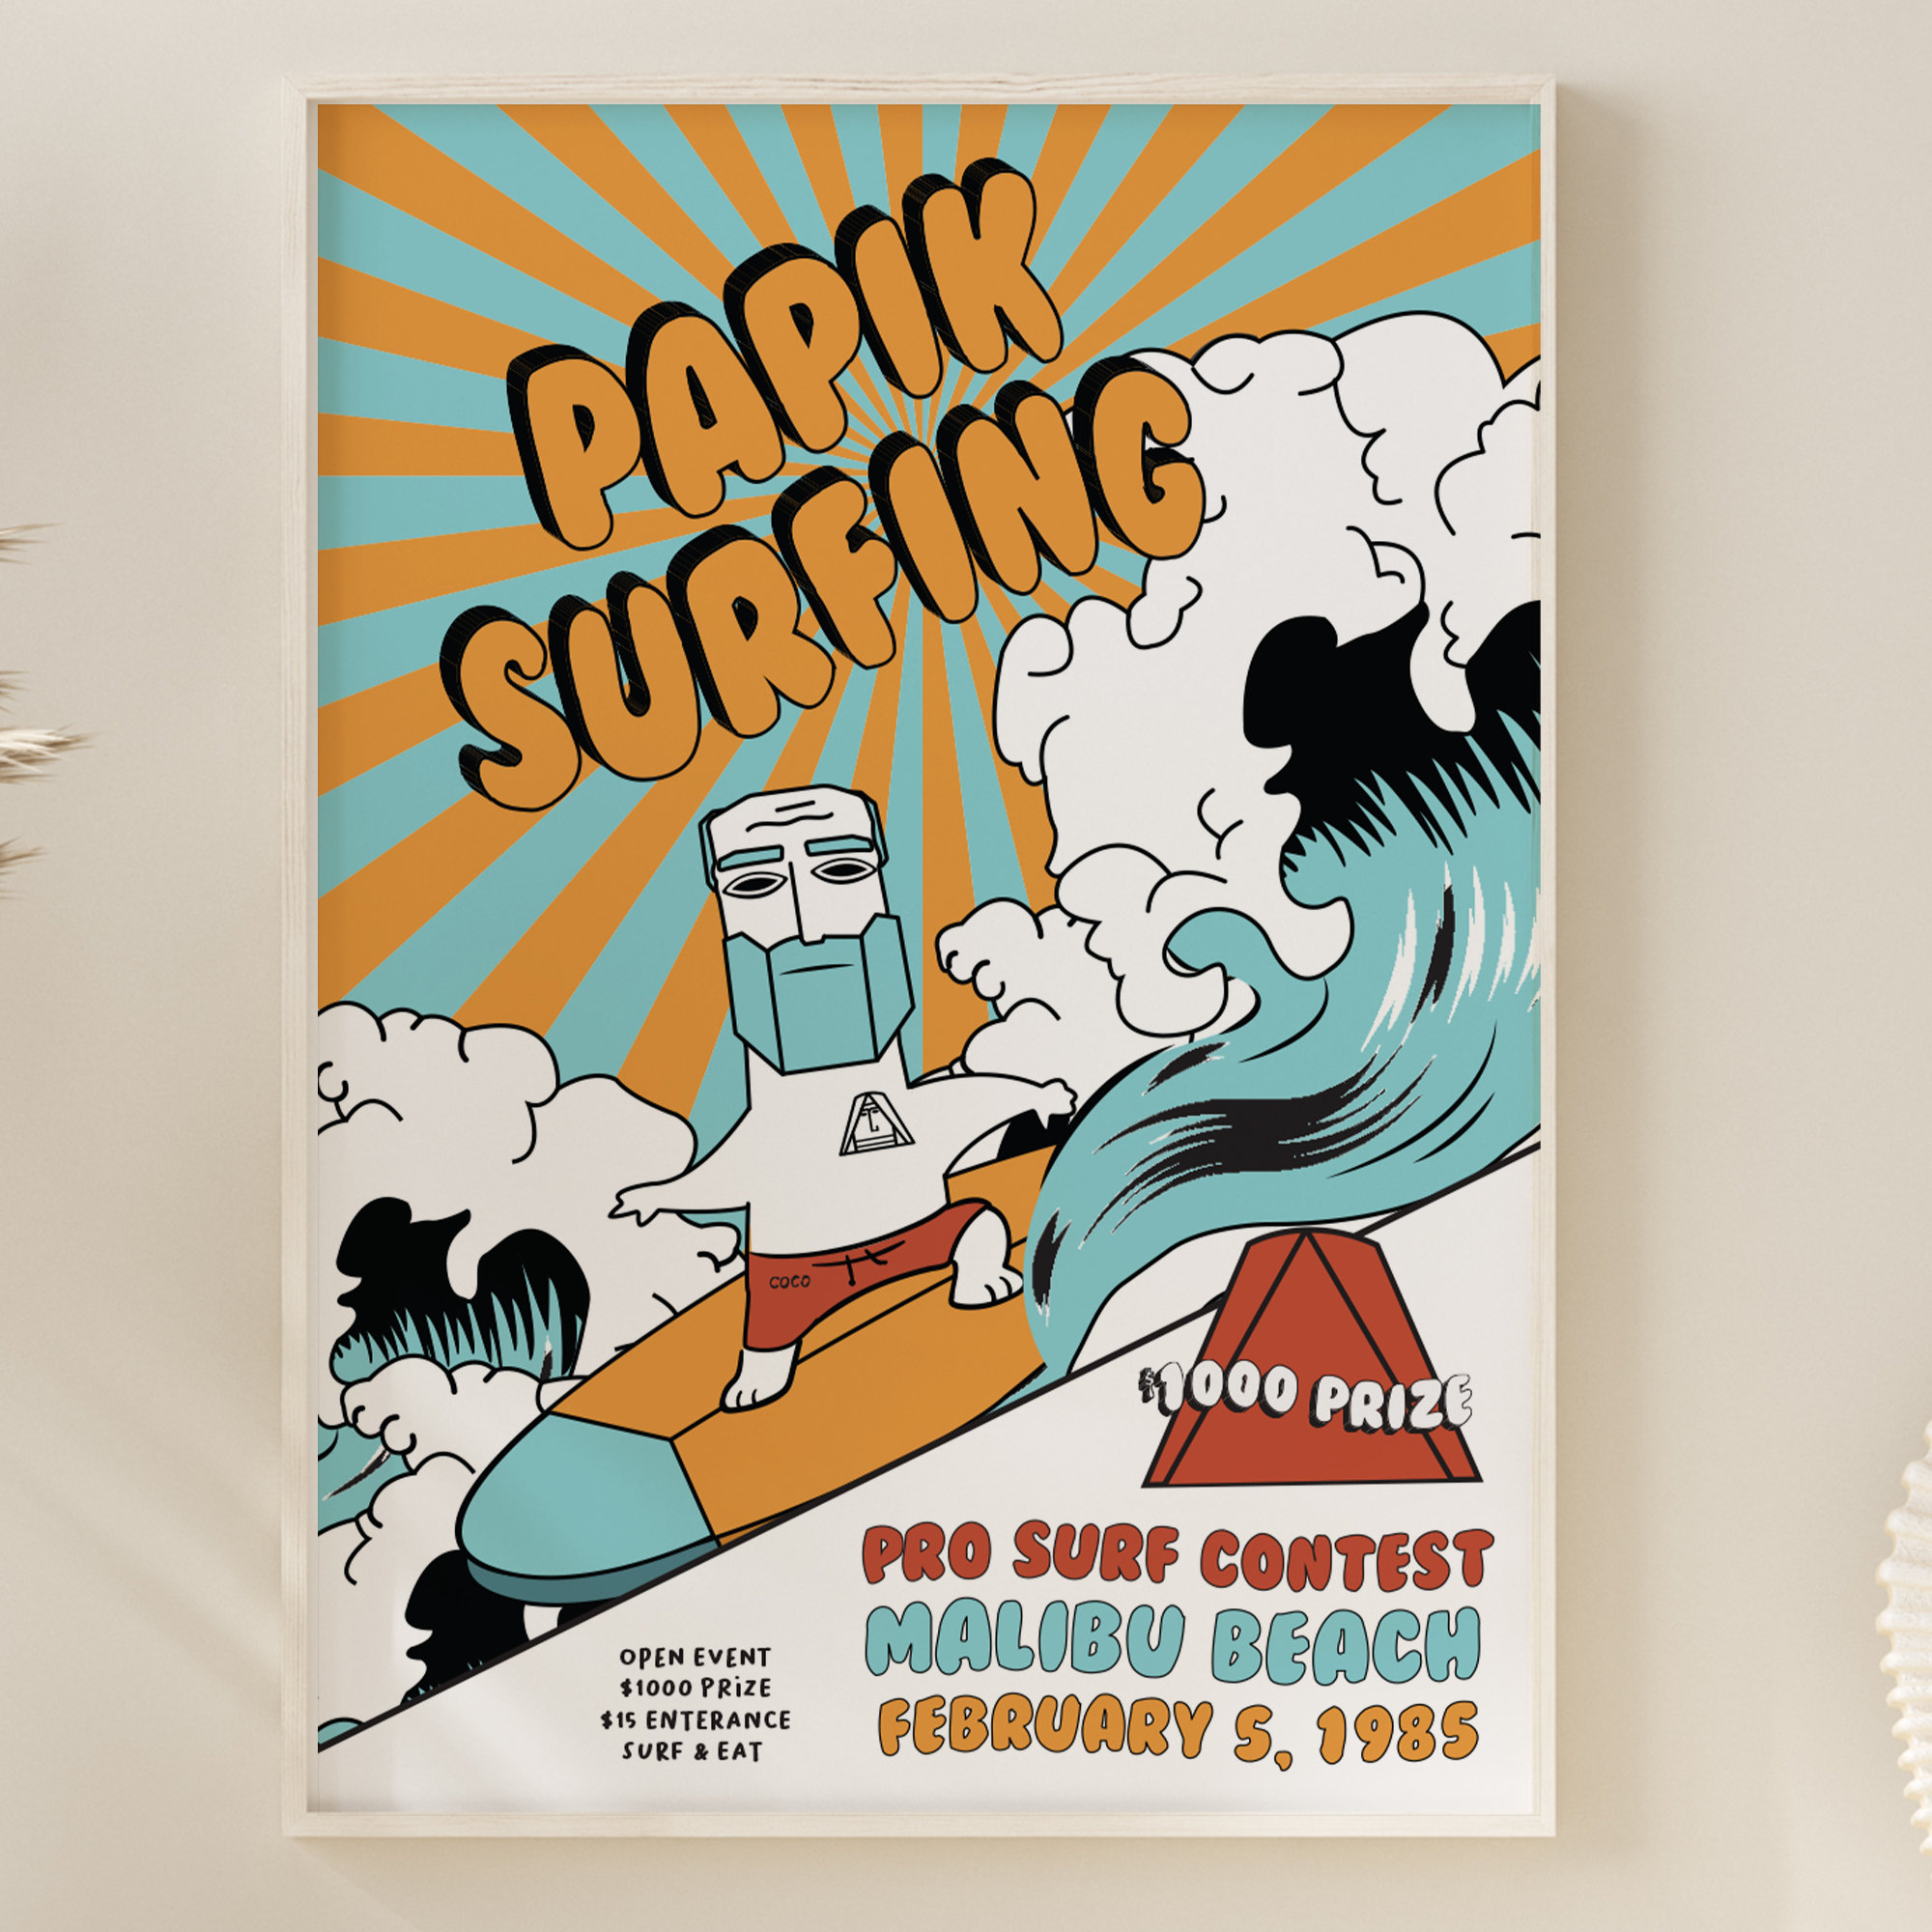 Papik Surfing - Malibu 1985 Vintage Competition Poster